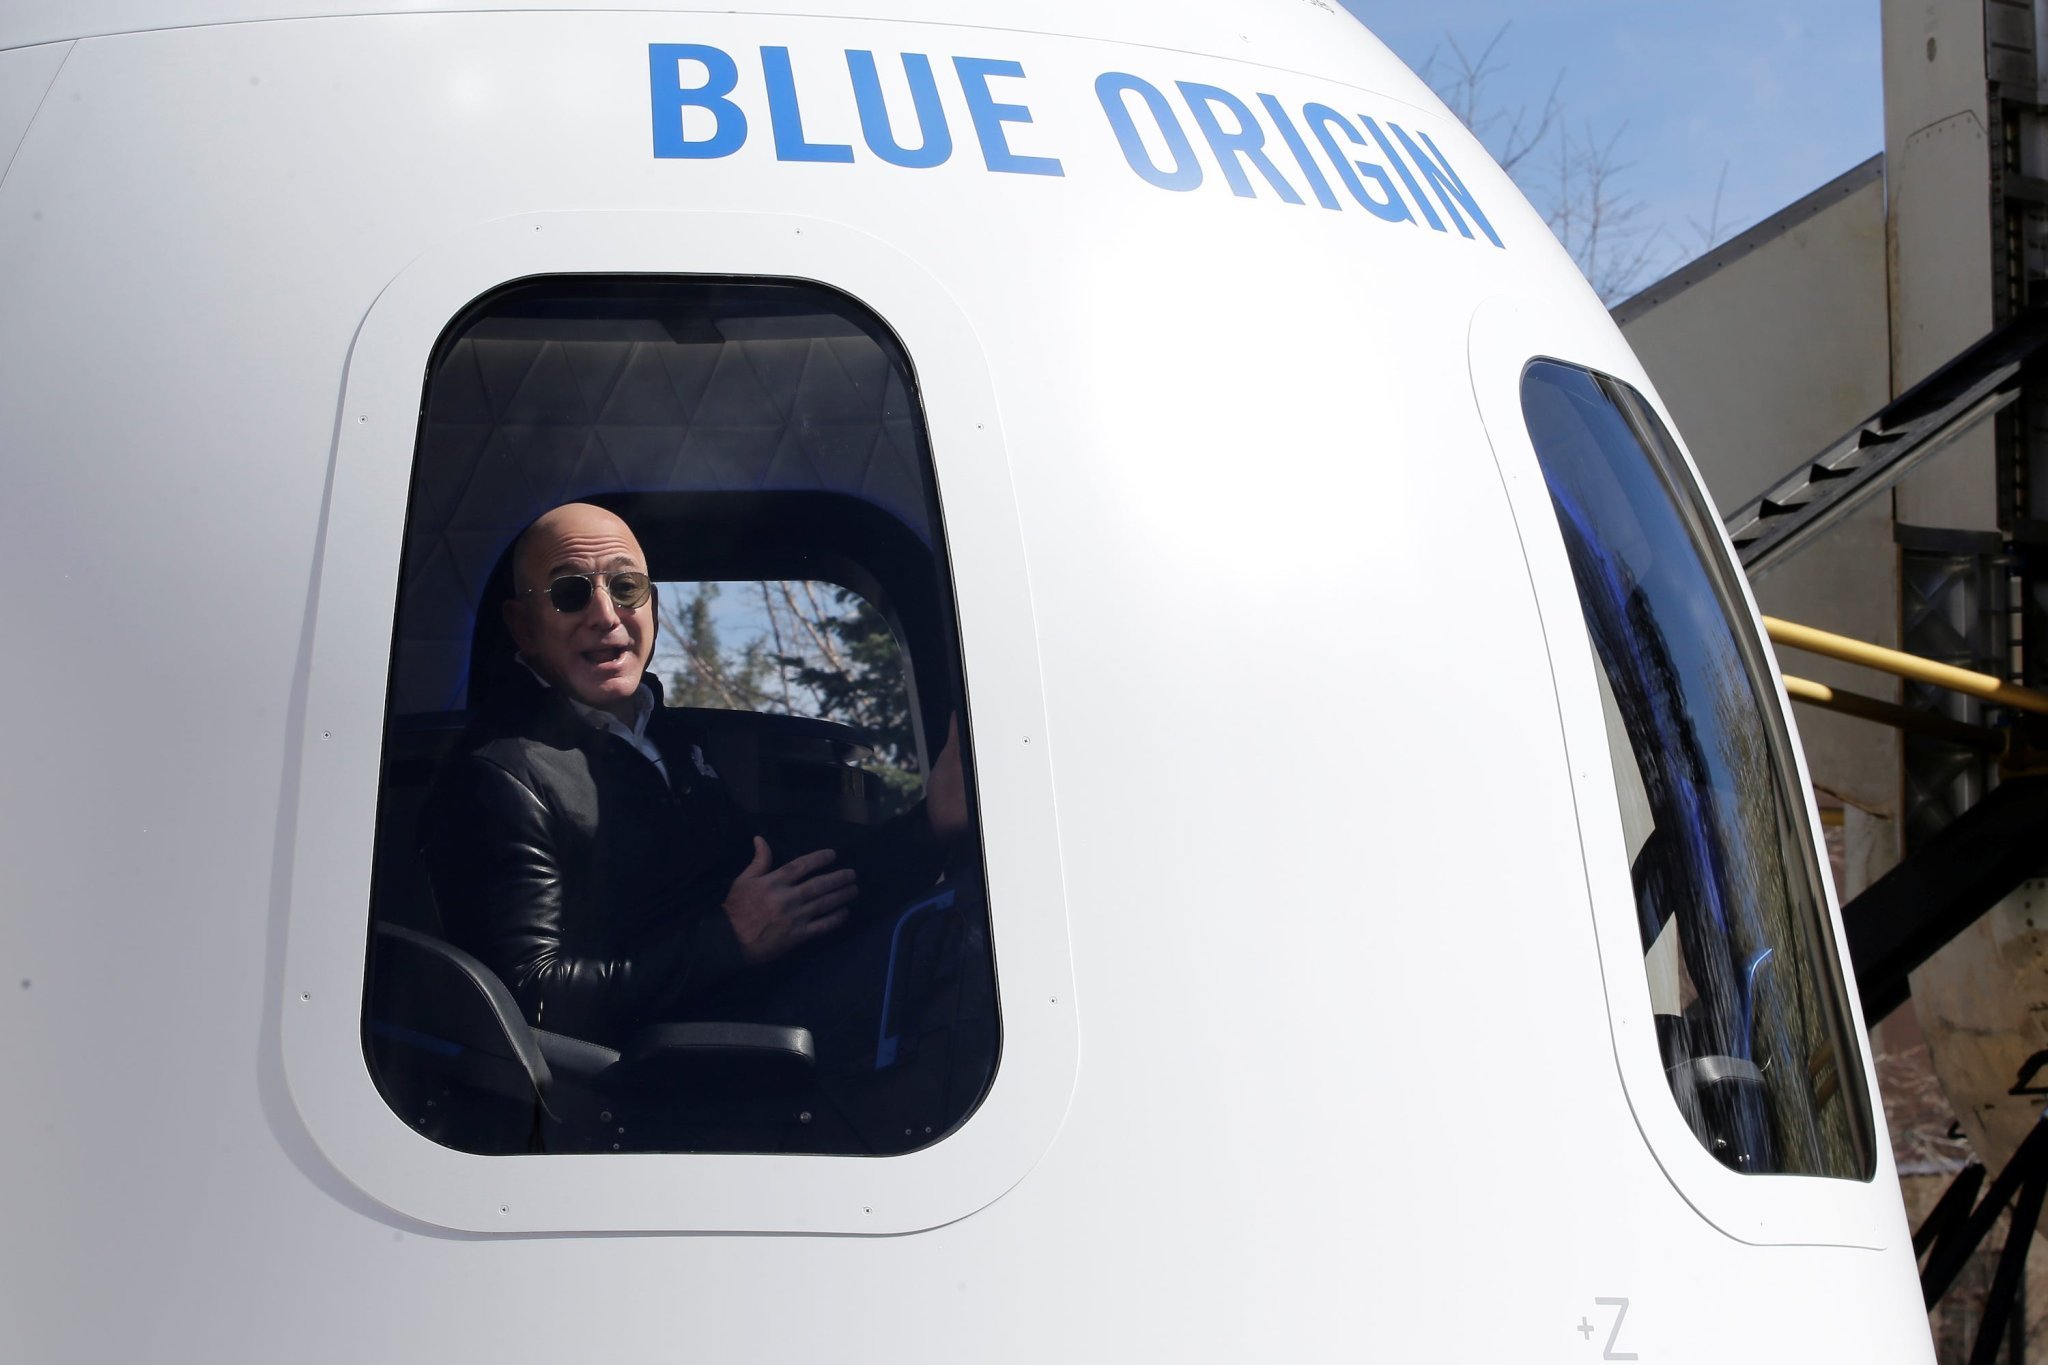 Jeff Bezos is launching to space on July 20 on a Blue Origin Rocket